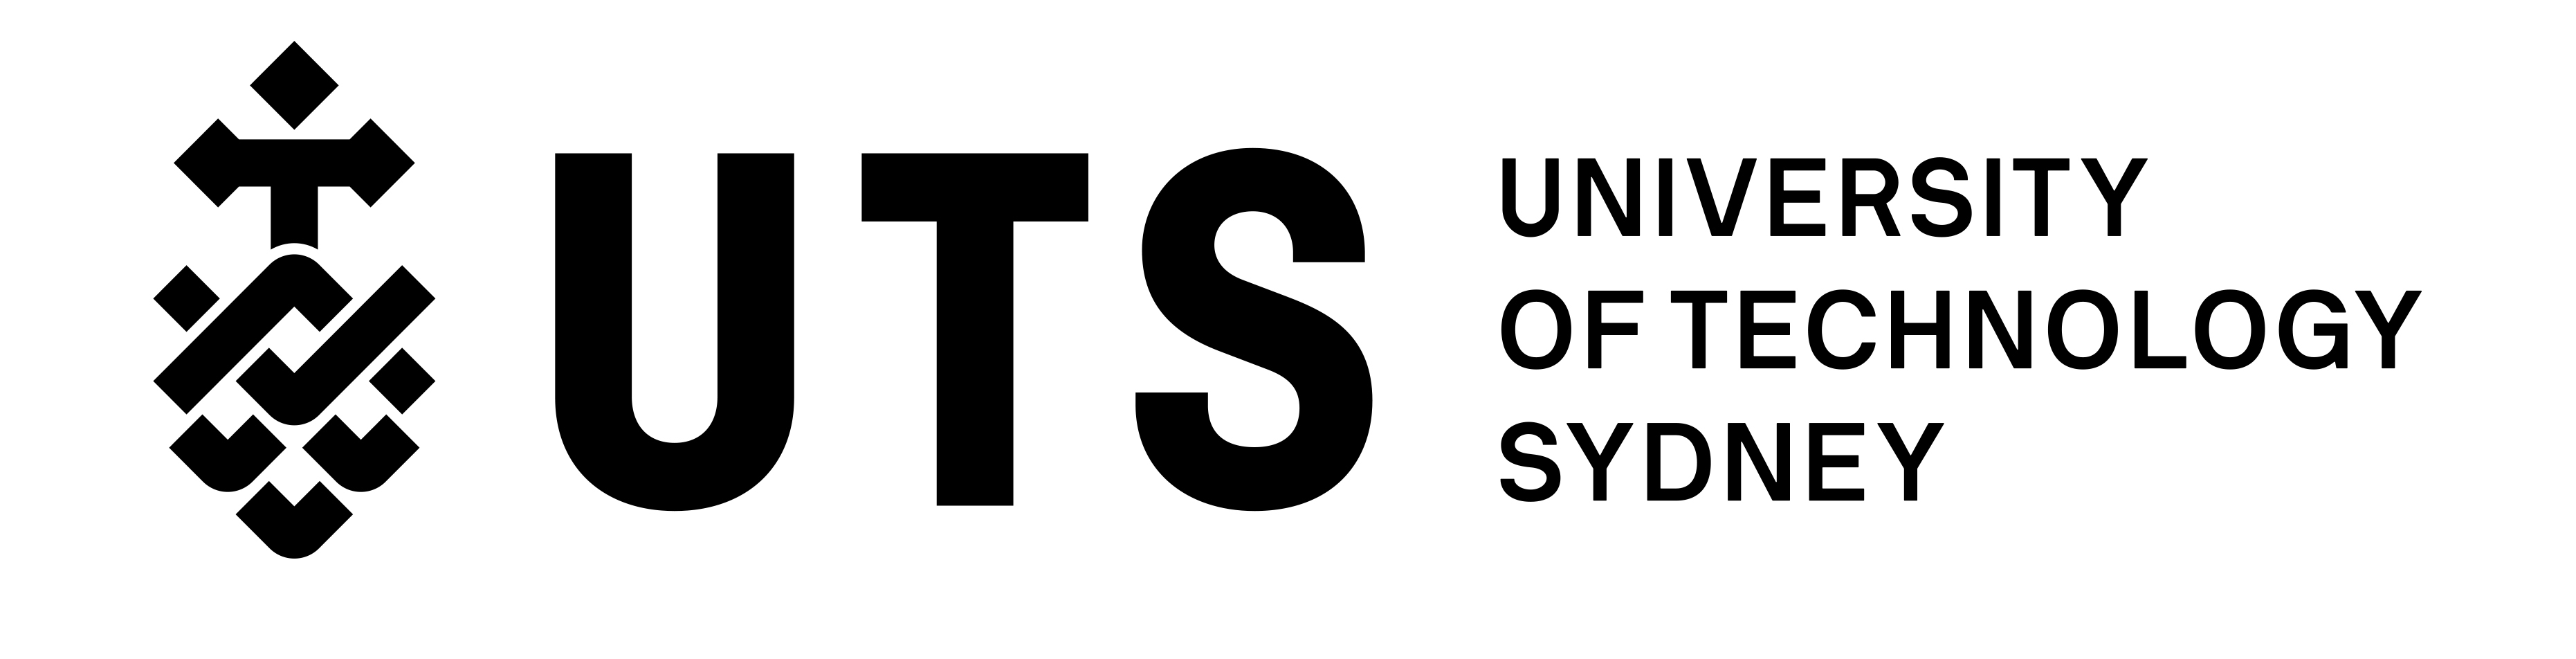 UTS Logo Full Version Primary RGB BLK